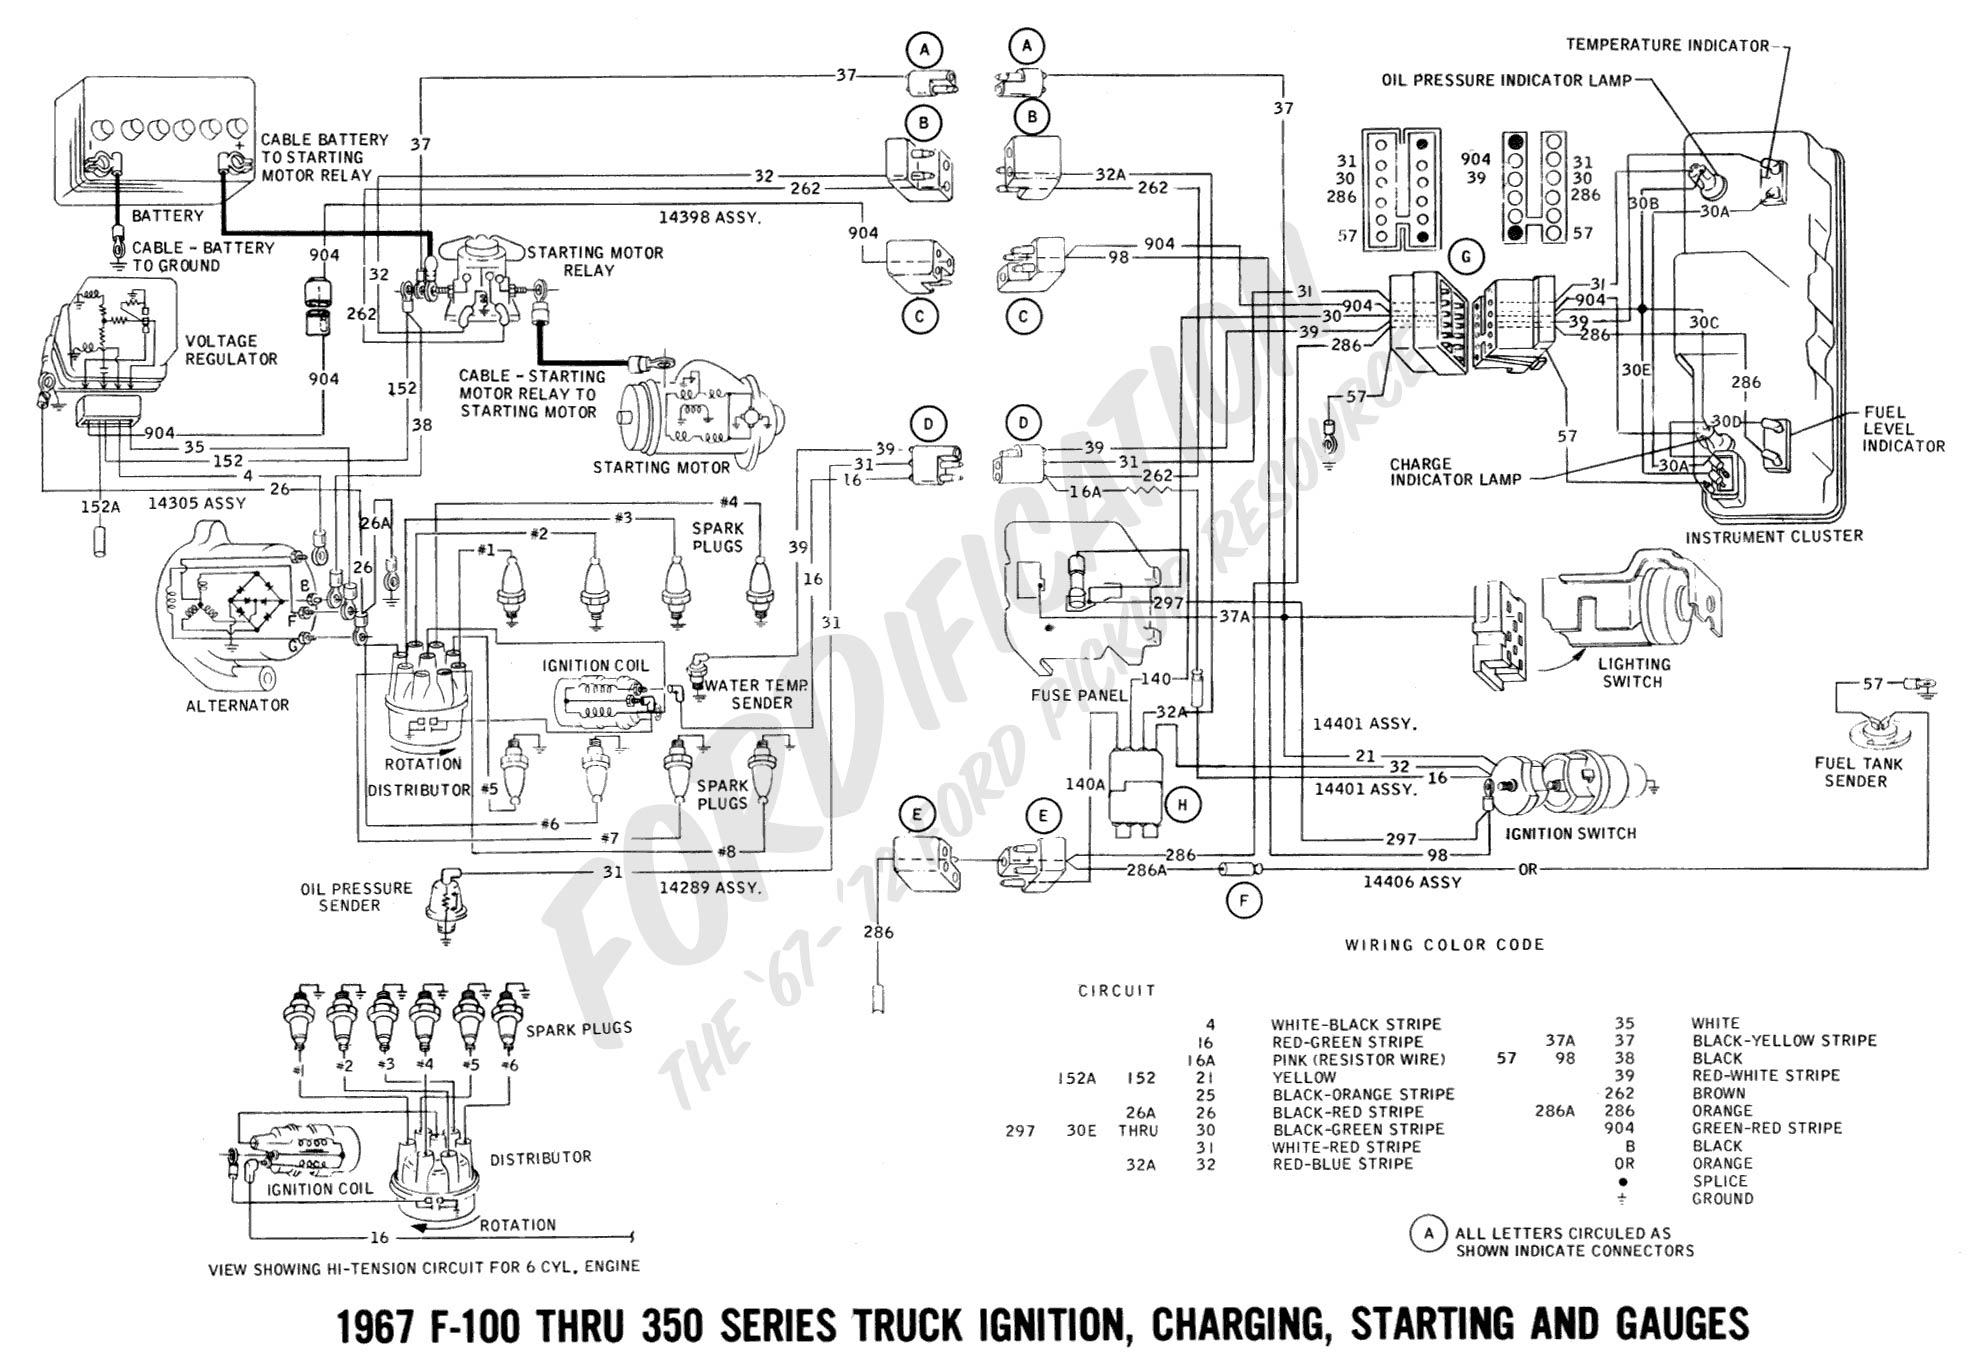 2001 Mustang Wiring Diagrams Lt1 Swap Wiring Diagram For Wiring Diagram Schematics